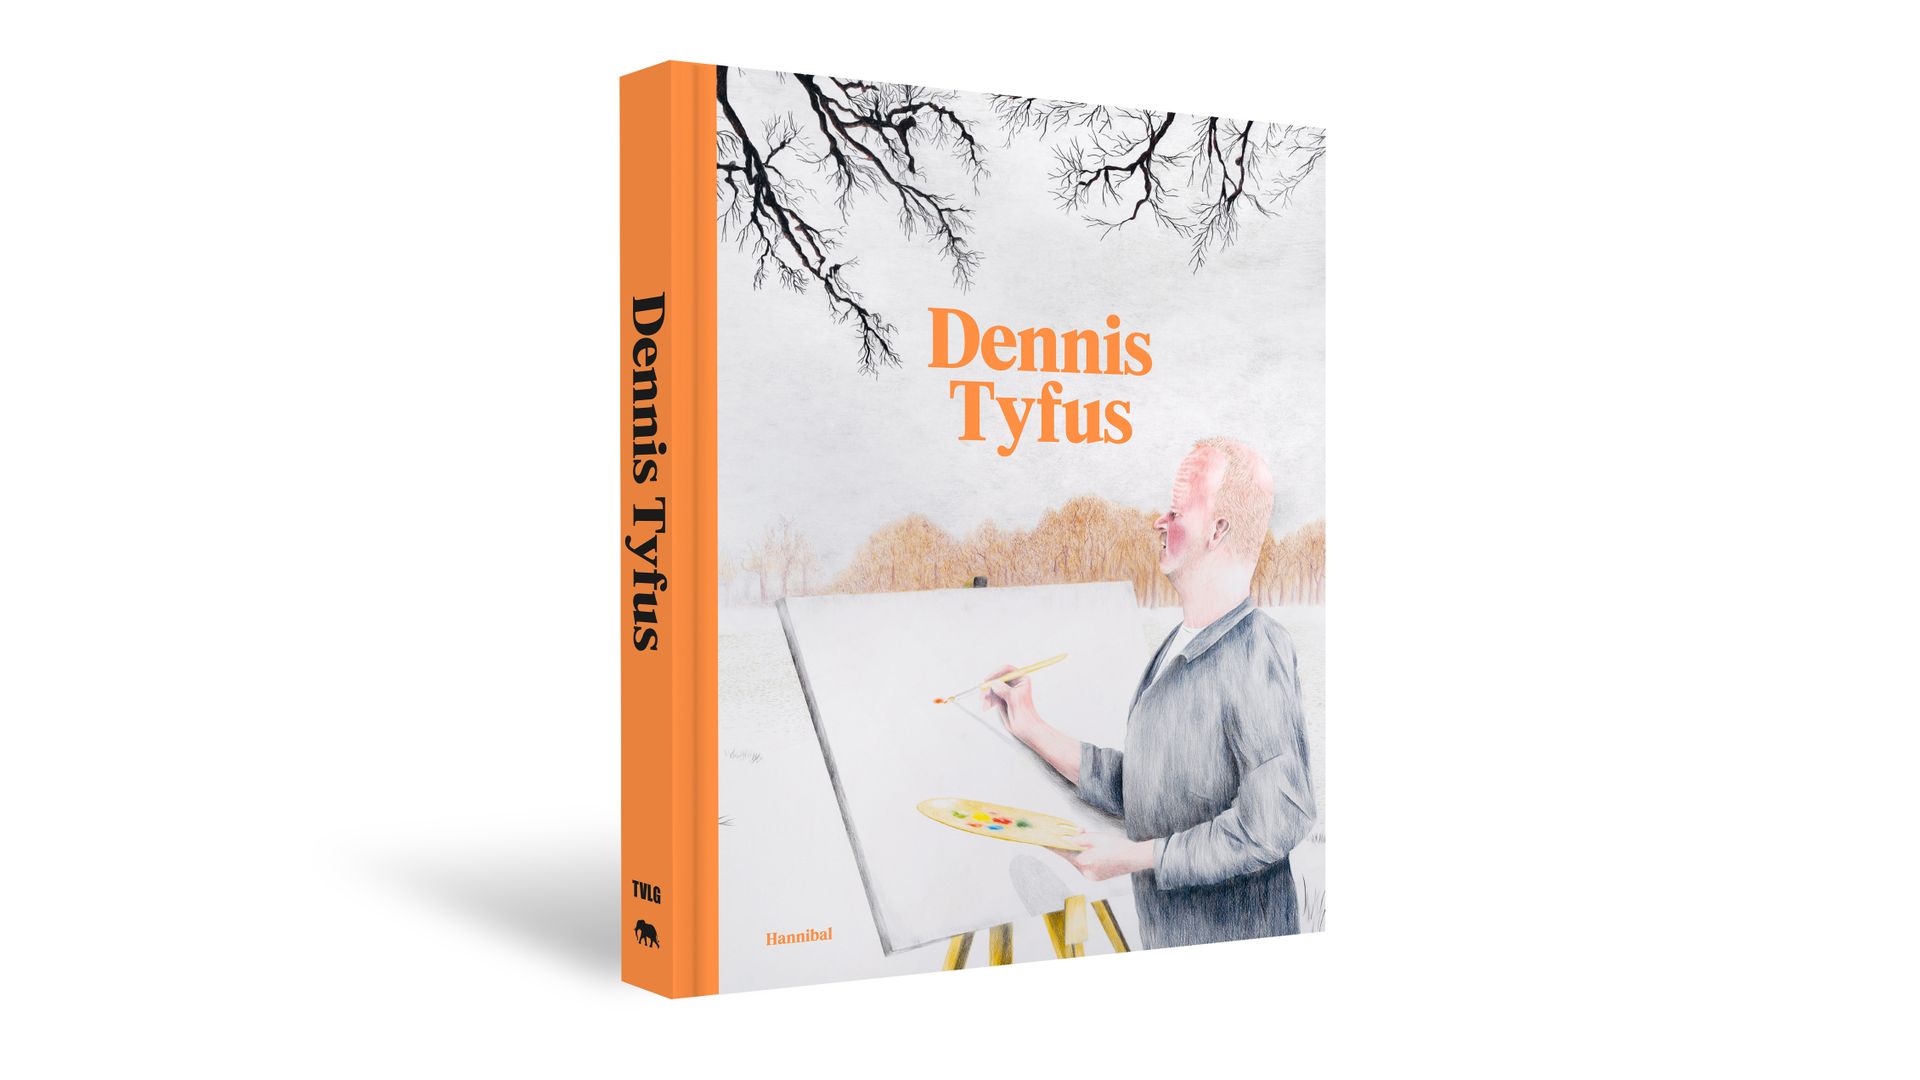 boek Dennis Tyfus